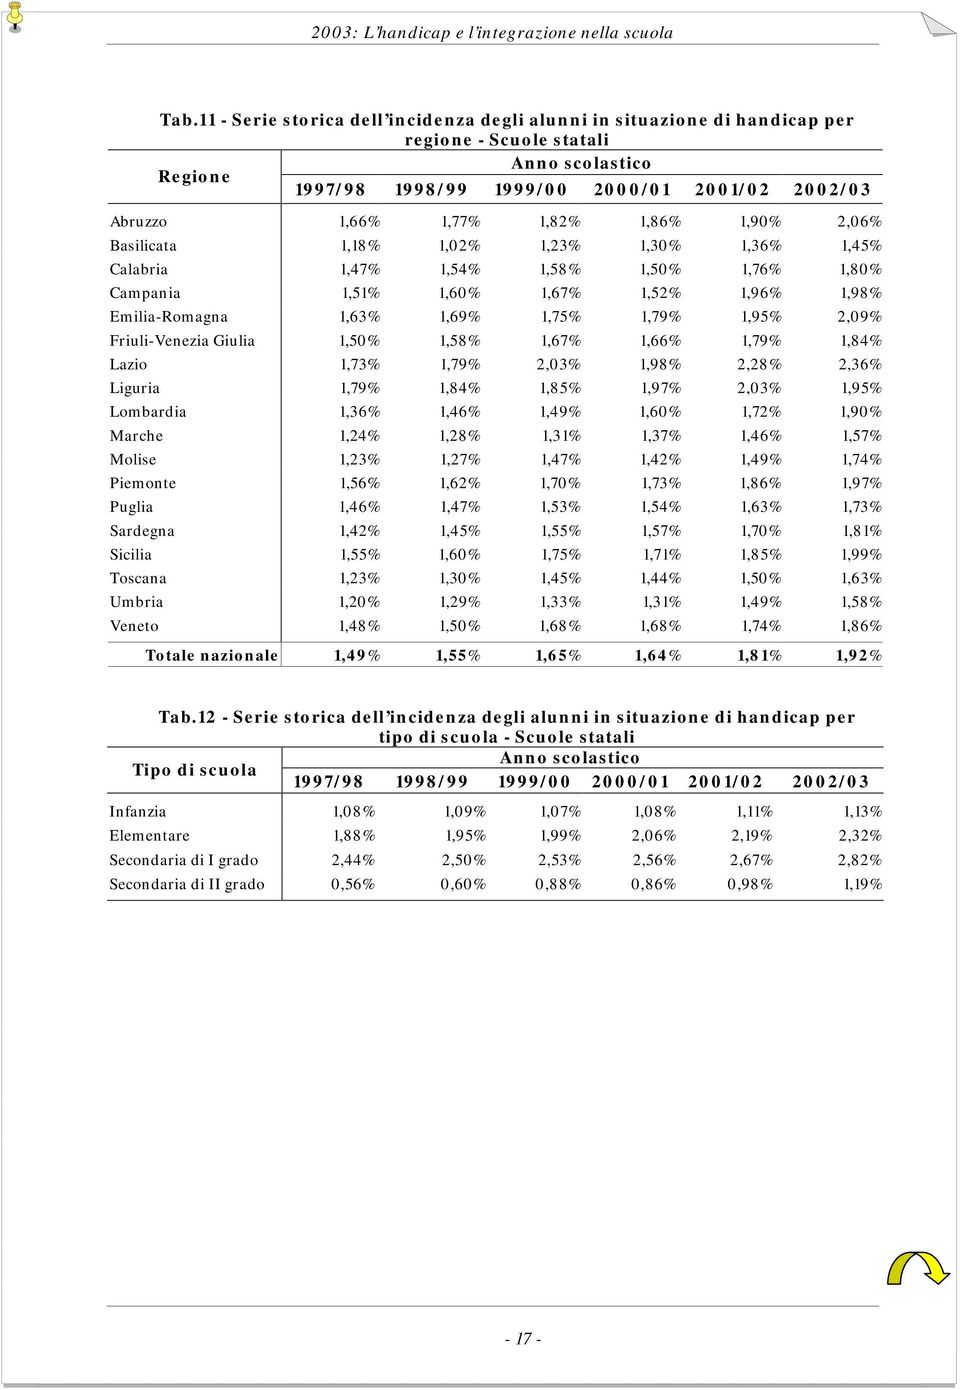 1,95% 2,09% Friuli-Venezia Giulia 1,50% 1,58% 1,67% 1,66% 1,79% 1,84% Lazio 1,73% 1,79% 2,03% 1,98% 2,28% 2,36% Liguria 1,79% 1,84% 1,85% 1,97% 2,03% 1,95% Lombardia 1,36% 1,46% 1,49% 1,60% 1,72%